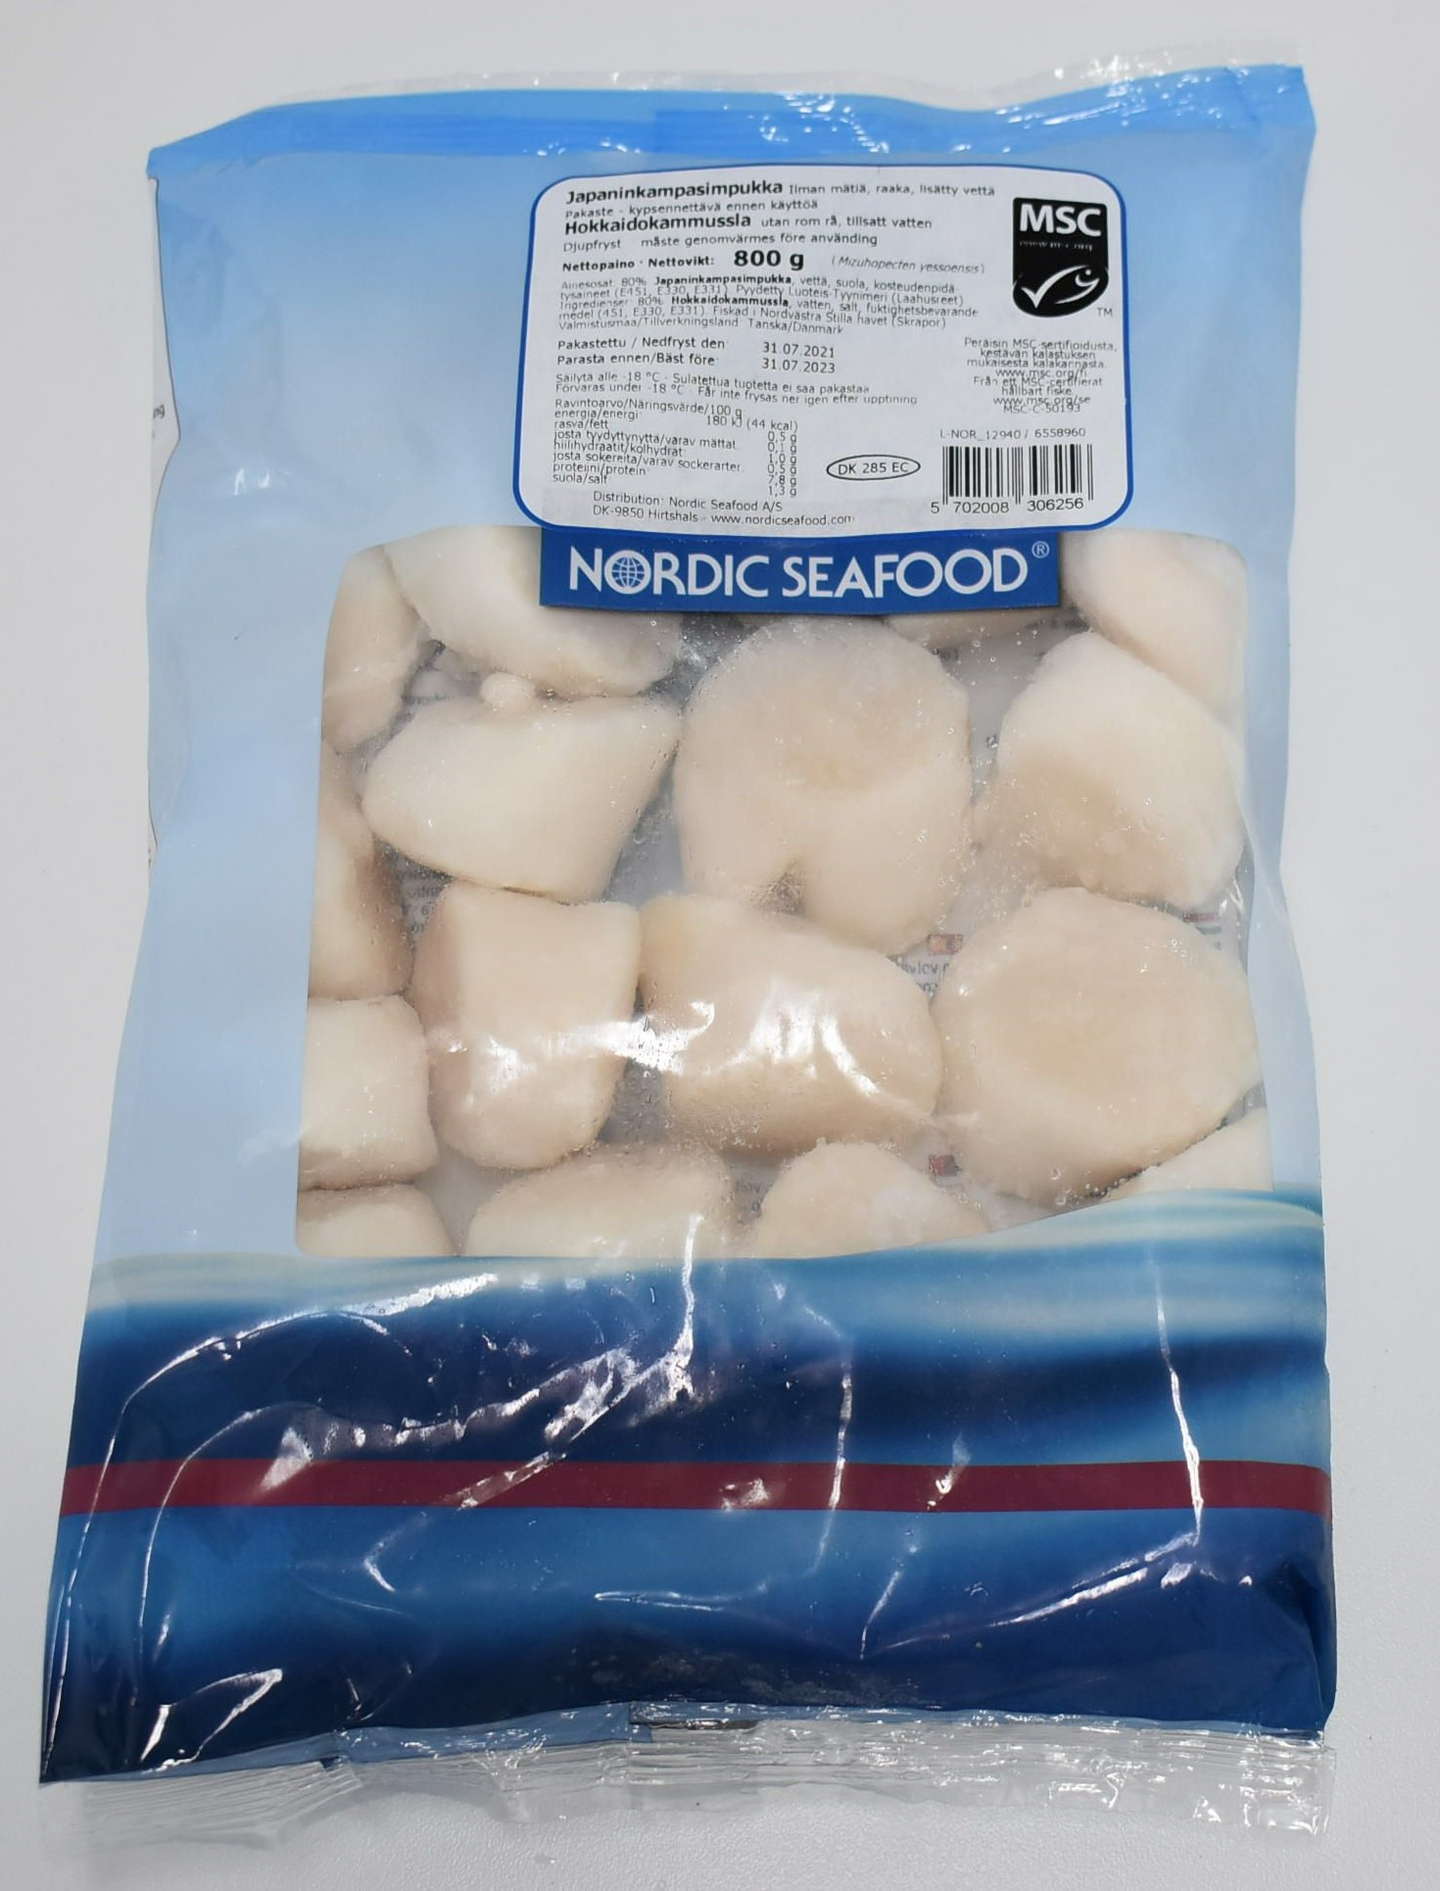 Nordic Seafood kampasimpukan liha 800g 10-20 MSC pakaste